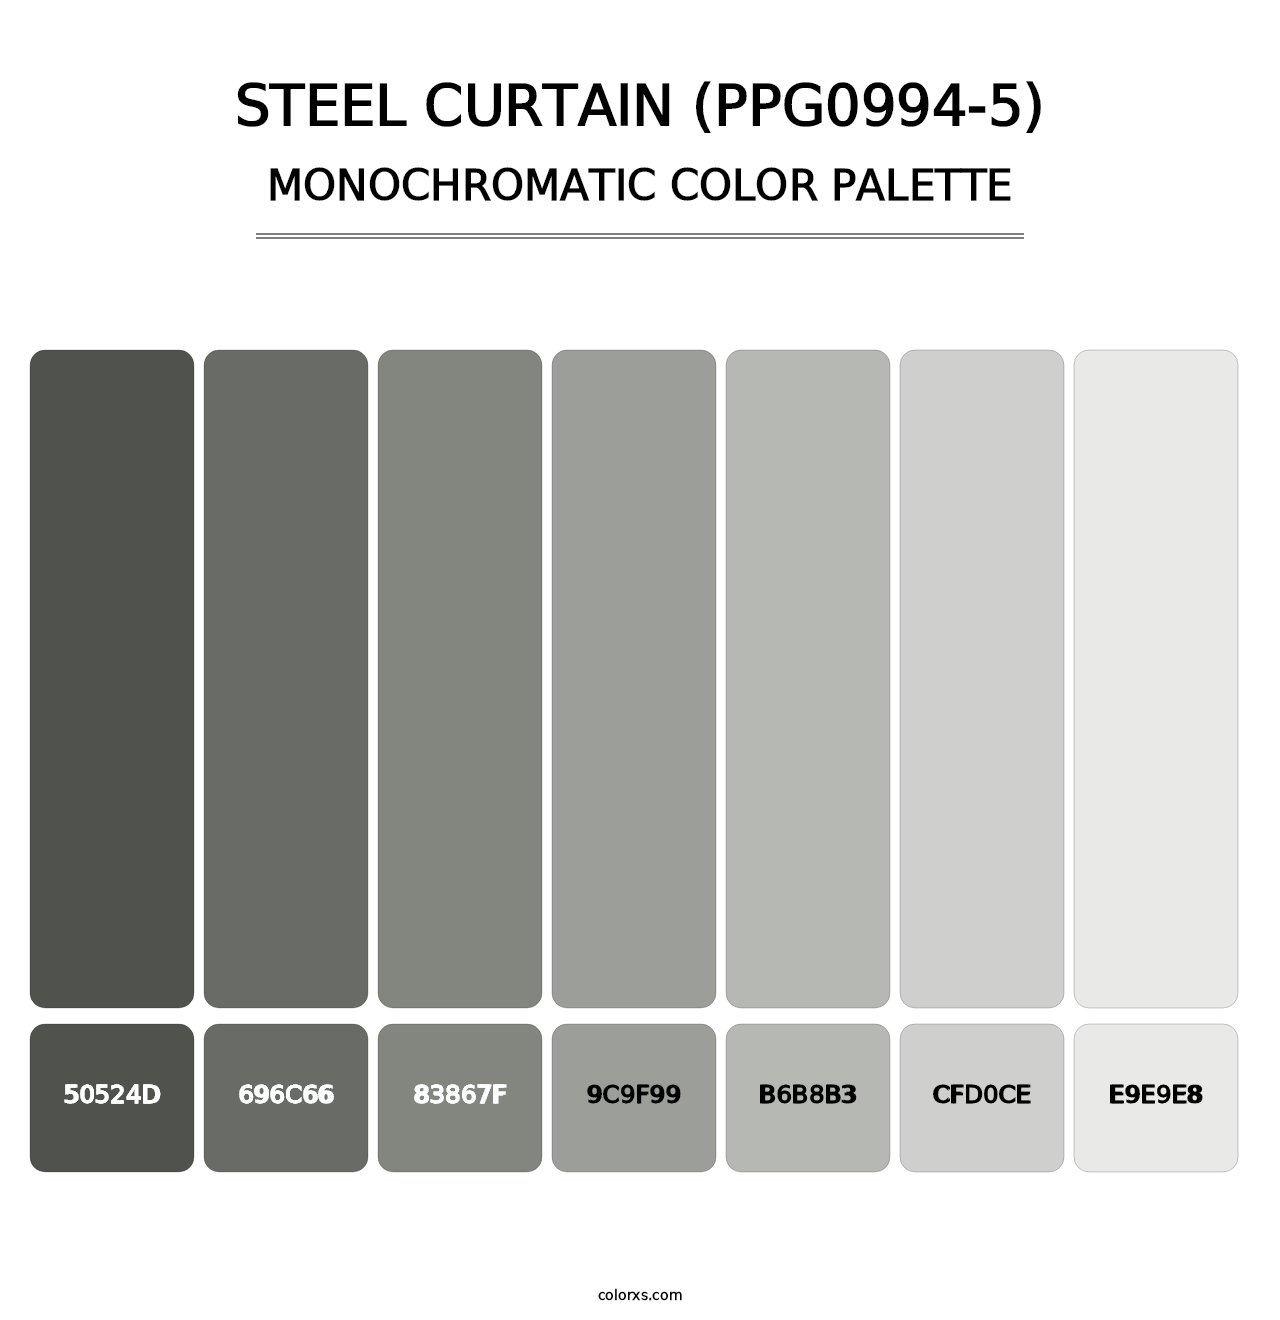 Steel Curtain (PPG0994-5) - Monochromatic Color Palette